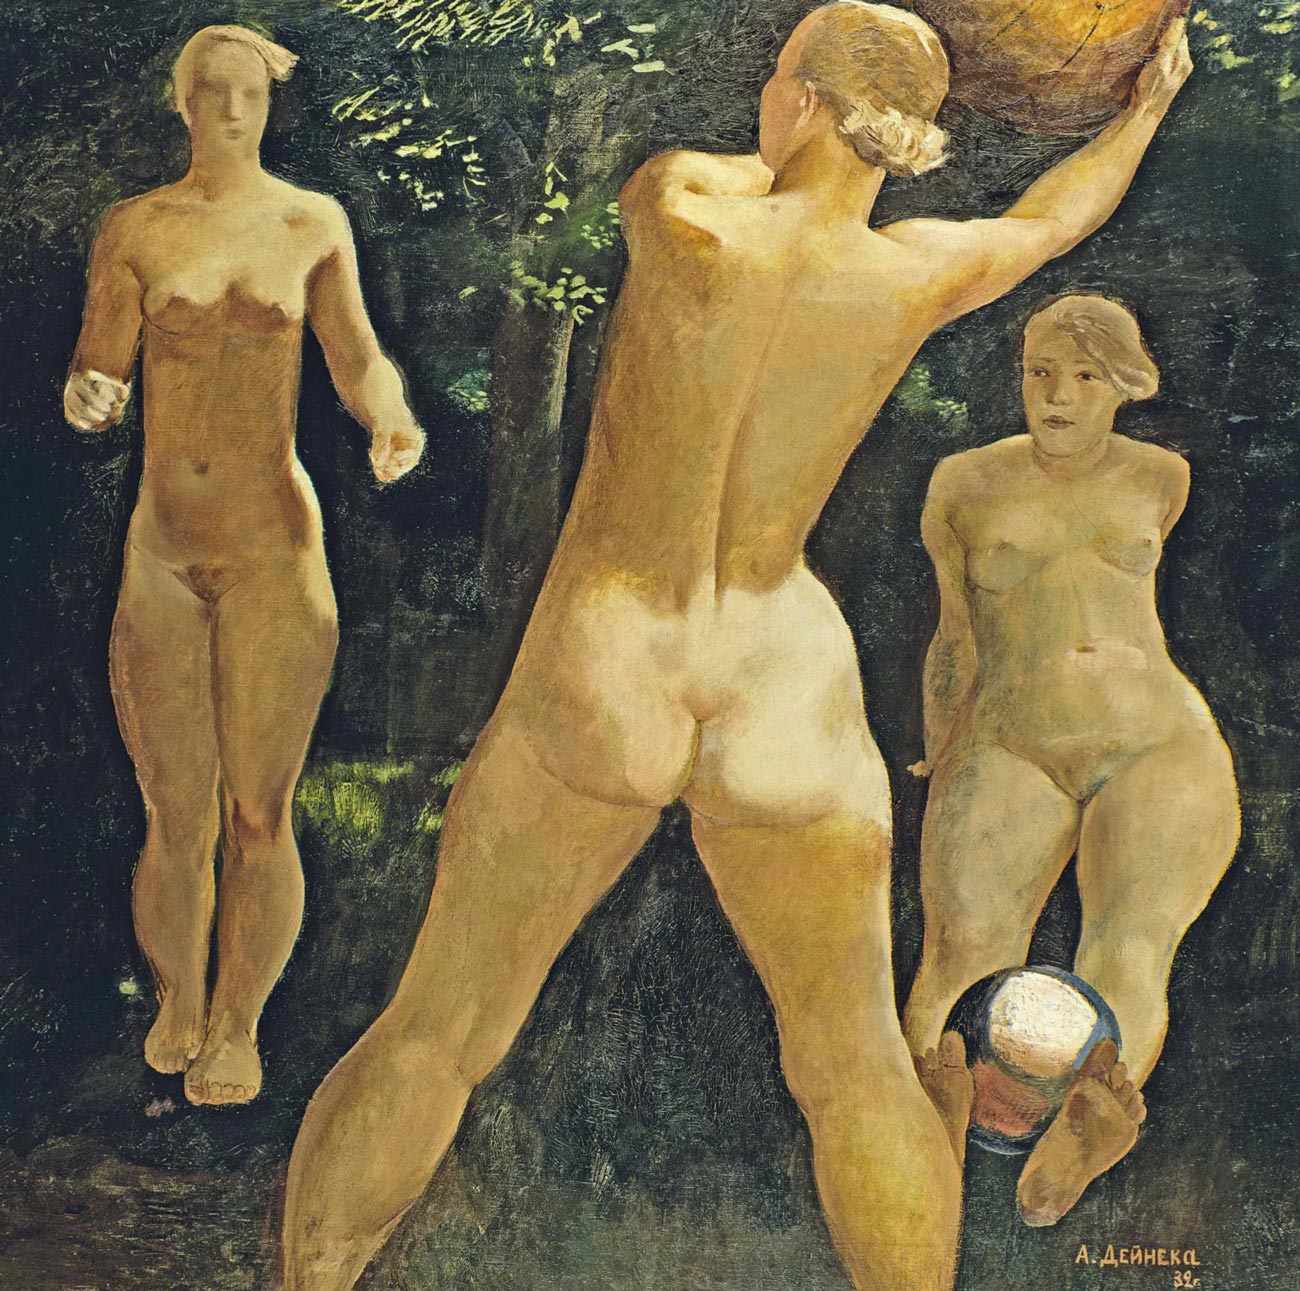 Aleksandr Deineka, Le jeu de ballon, 1932